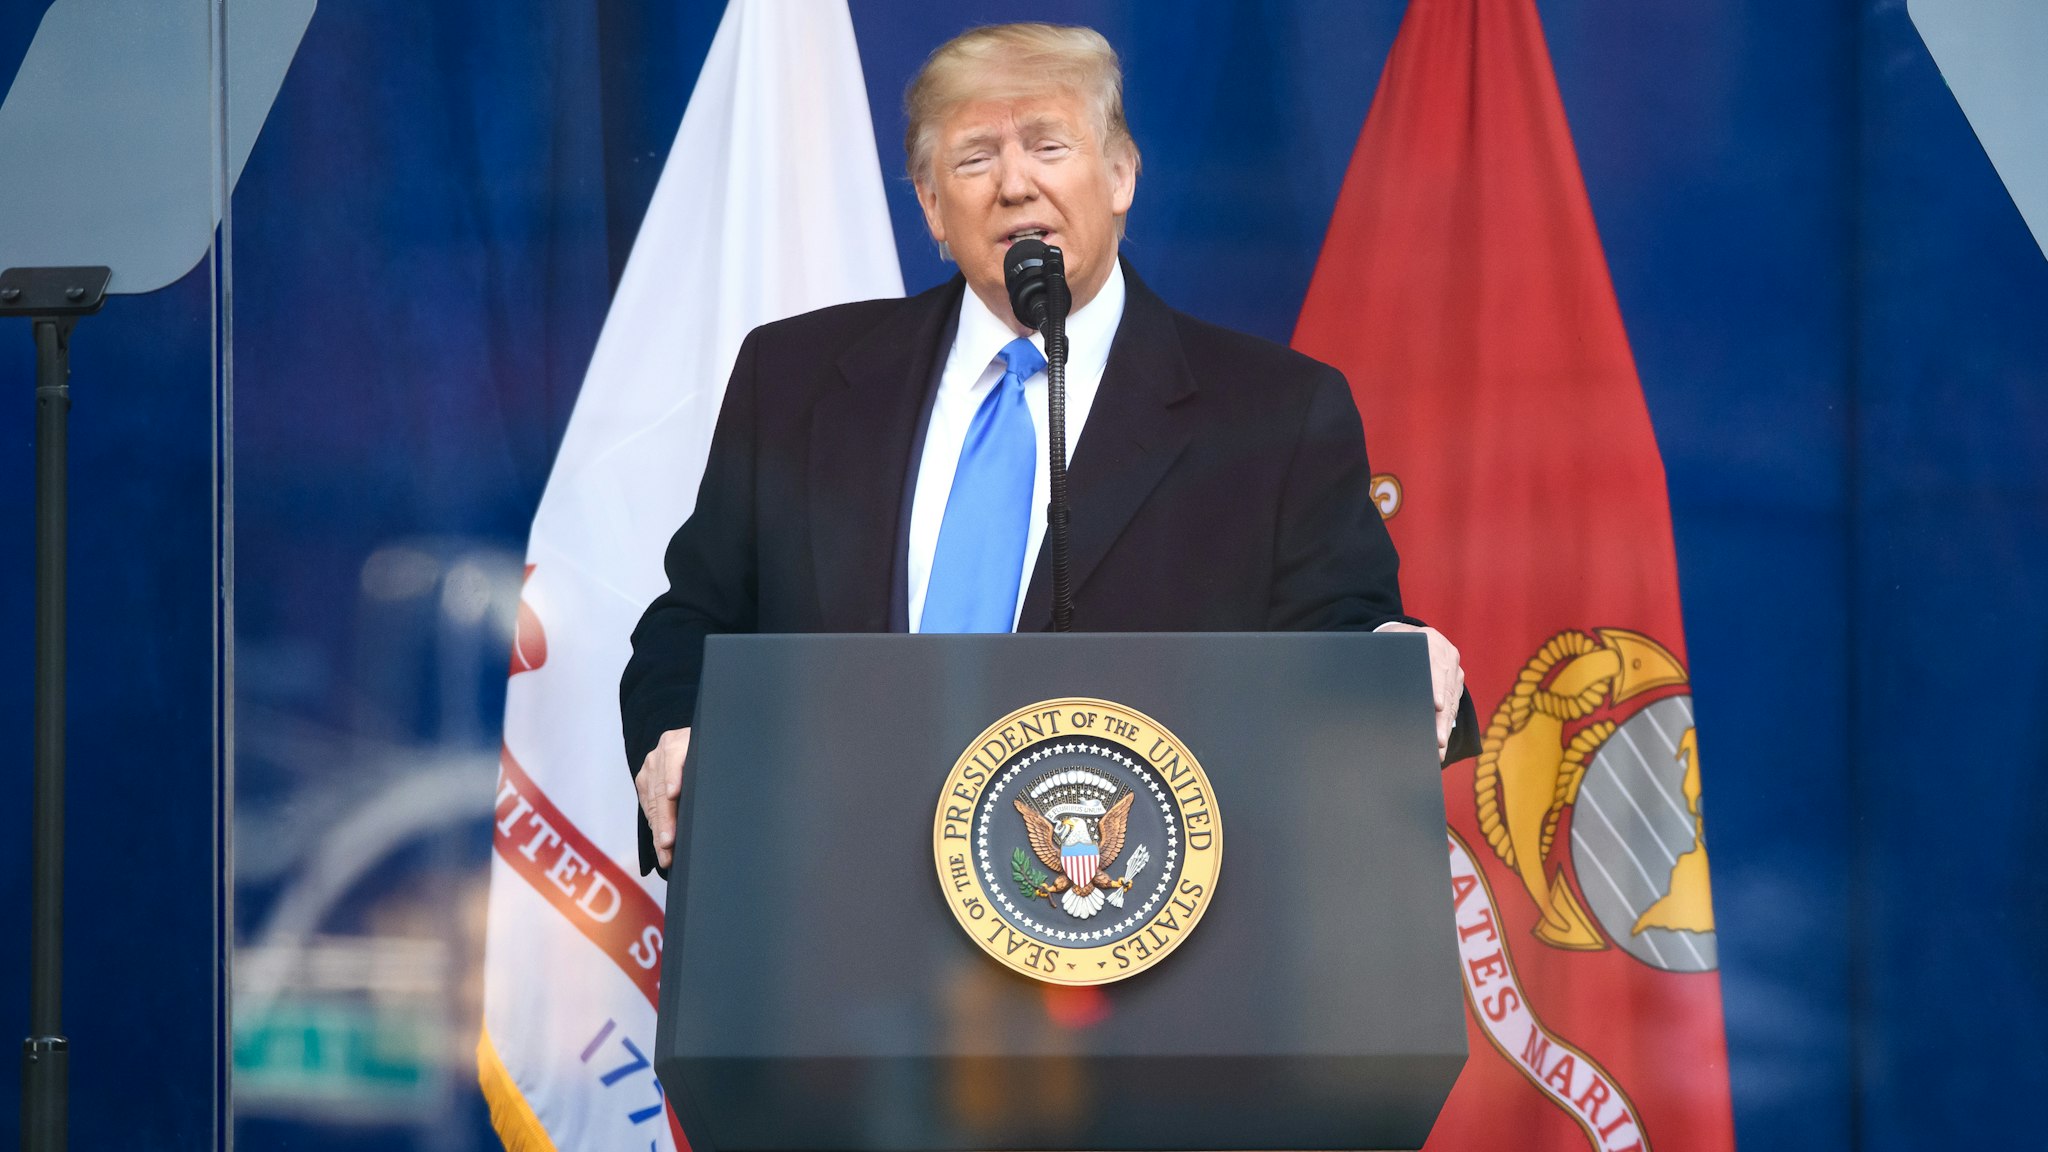 NEW YORK, NEW YORK - NOVEMBER 11: President Donald Trump speaks during the Veterans Day Parade opening ceremony on November 11, 2019 in New York City.